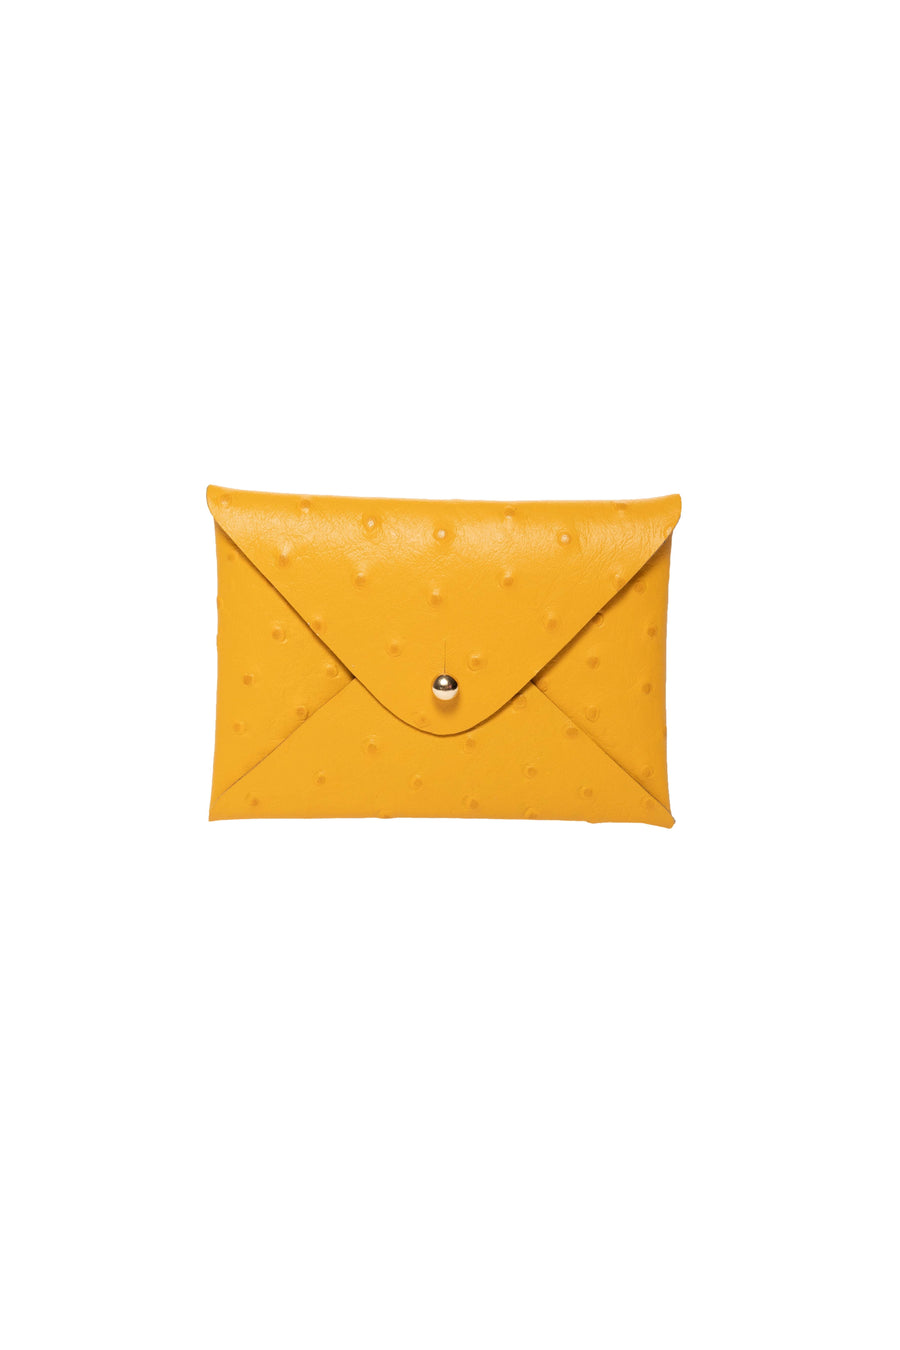 Card Holder Wallet Leather Handmade Mustard Gold Button Closure Ladicani Design